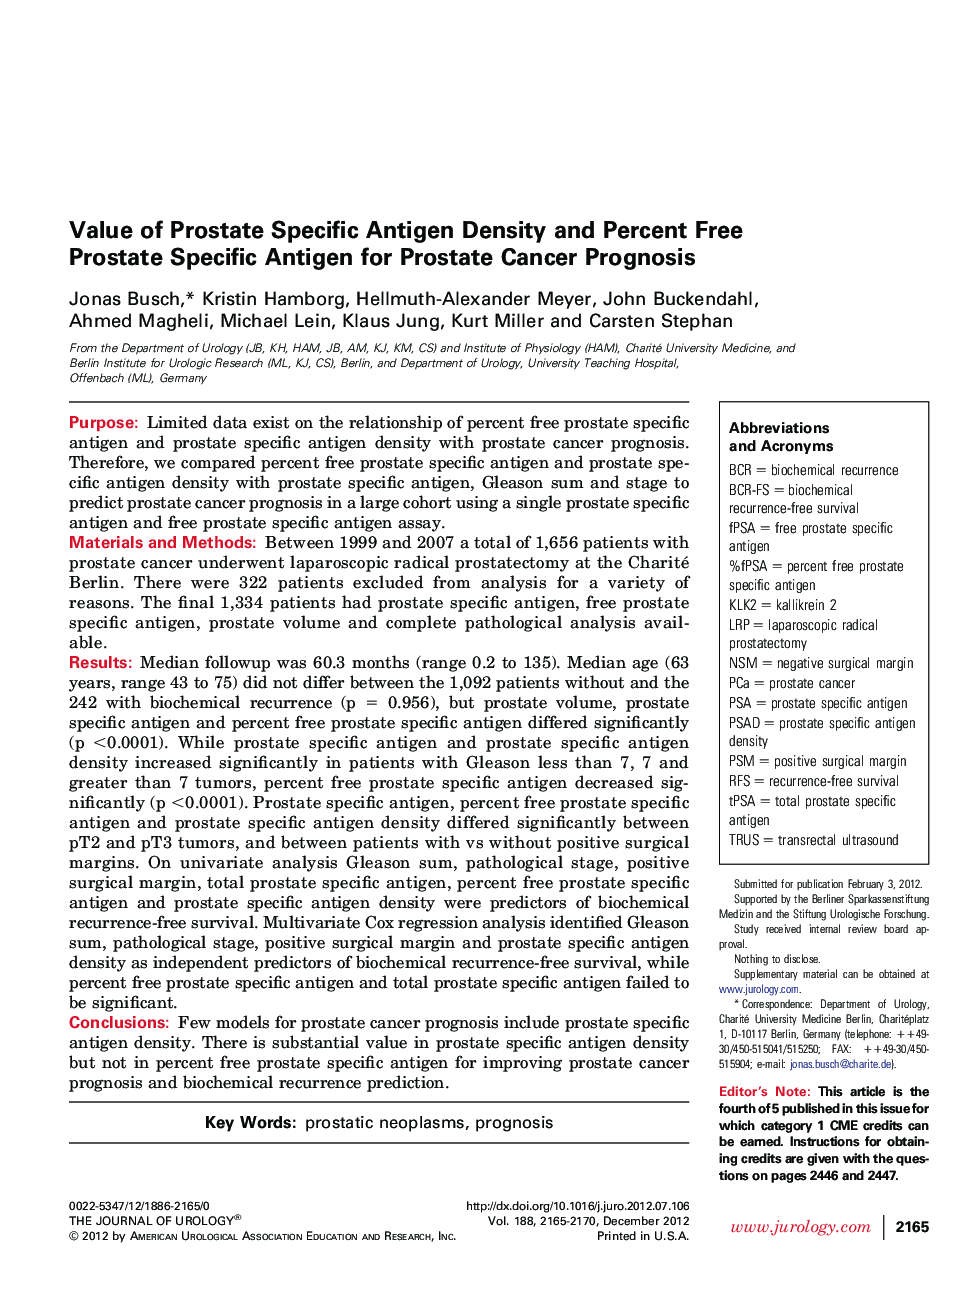 Value of Prostate Specific Antigen Density and Percent Free Prostate Specific Antigen for Prostate Cancer Prognosis